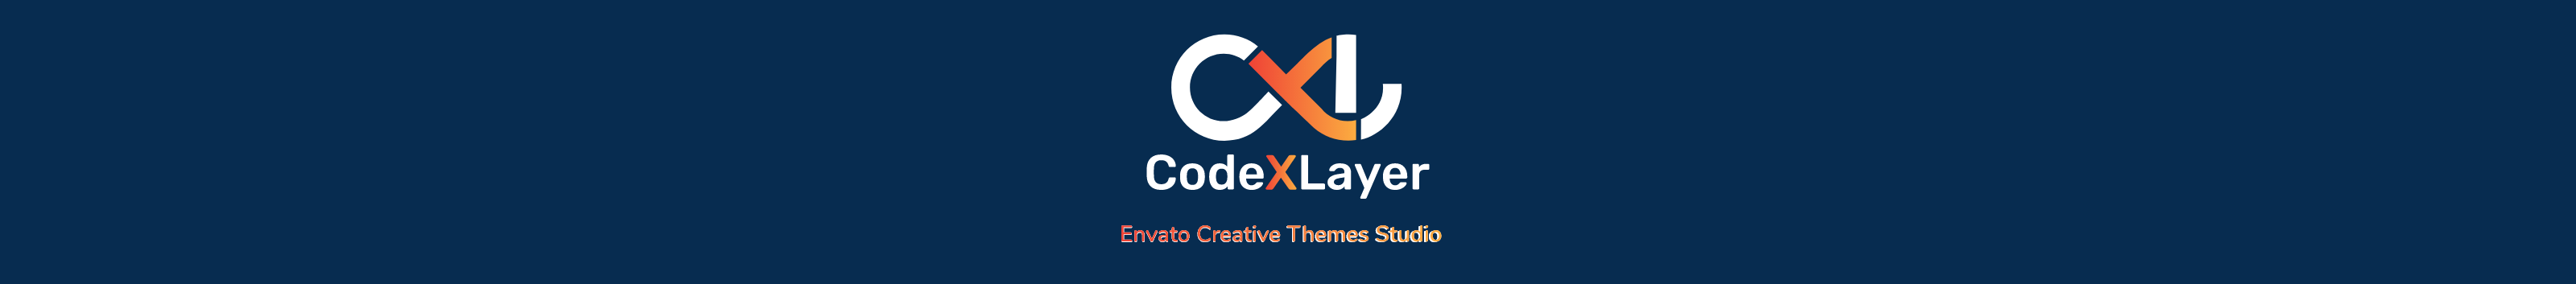 Code X Layer's profile banner